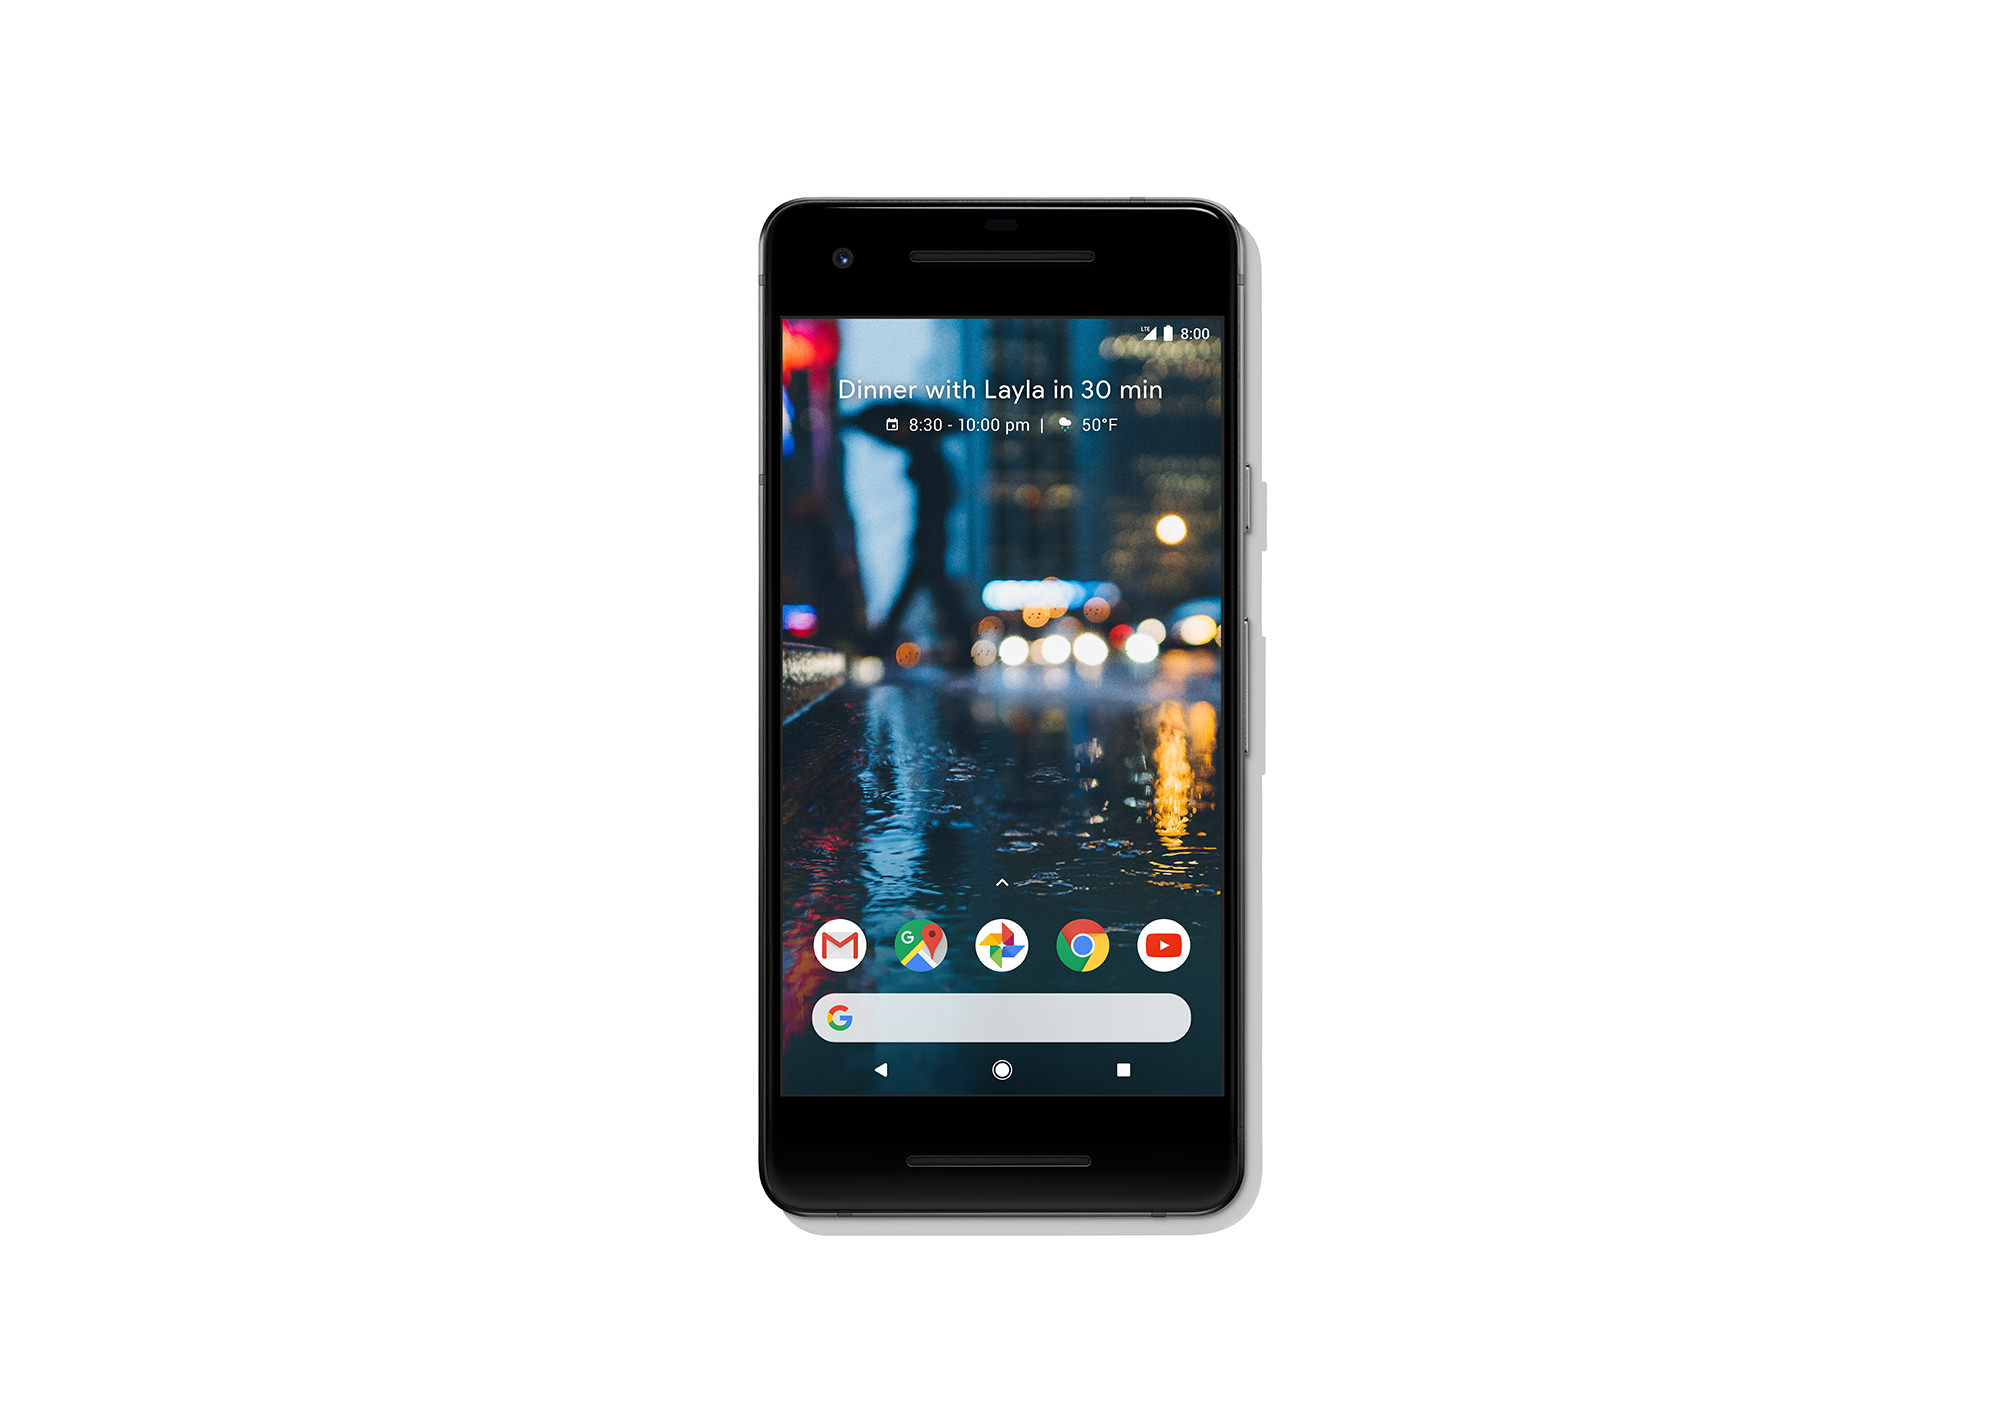 Google Pixel 2 64GB Verizon Smartphone, Black - image 1 of 7